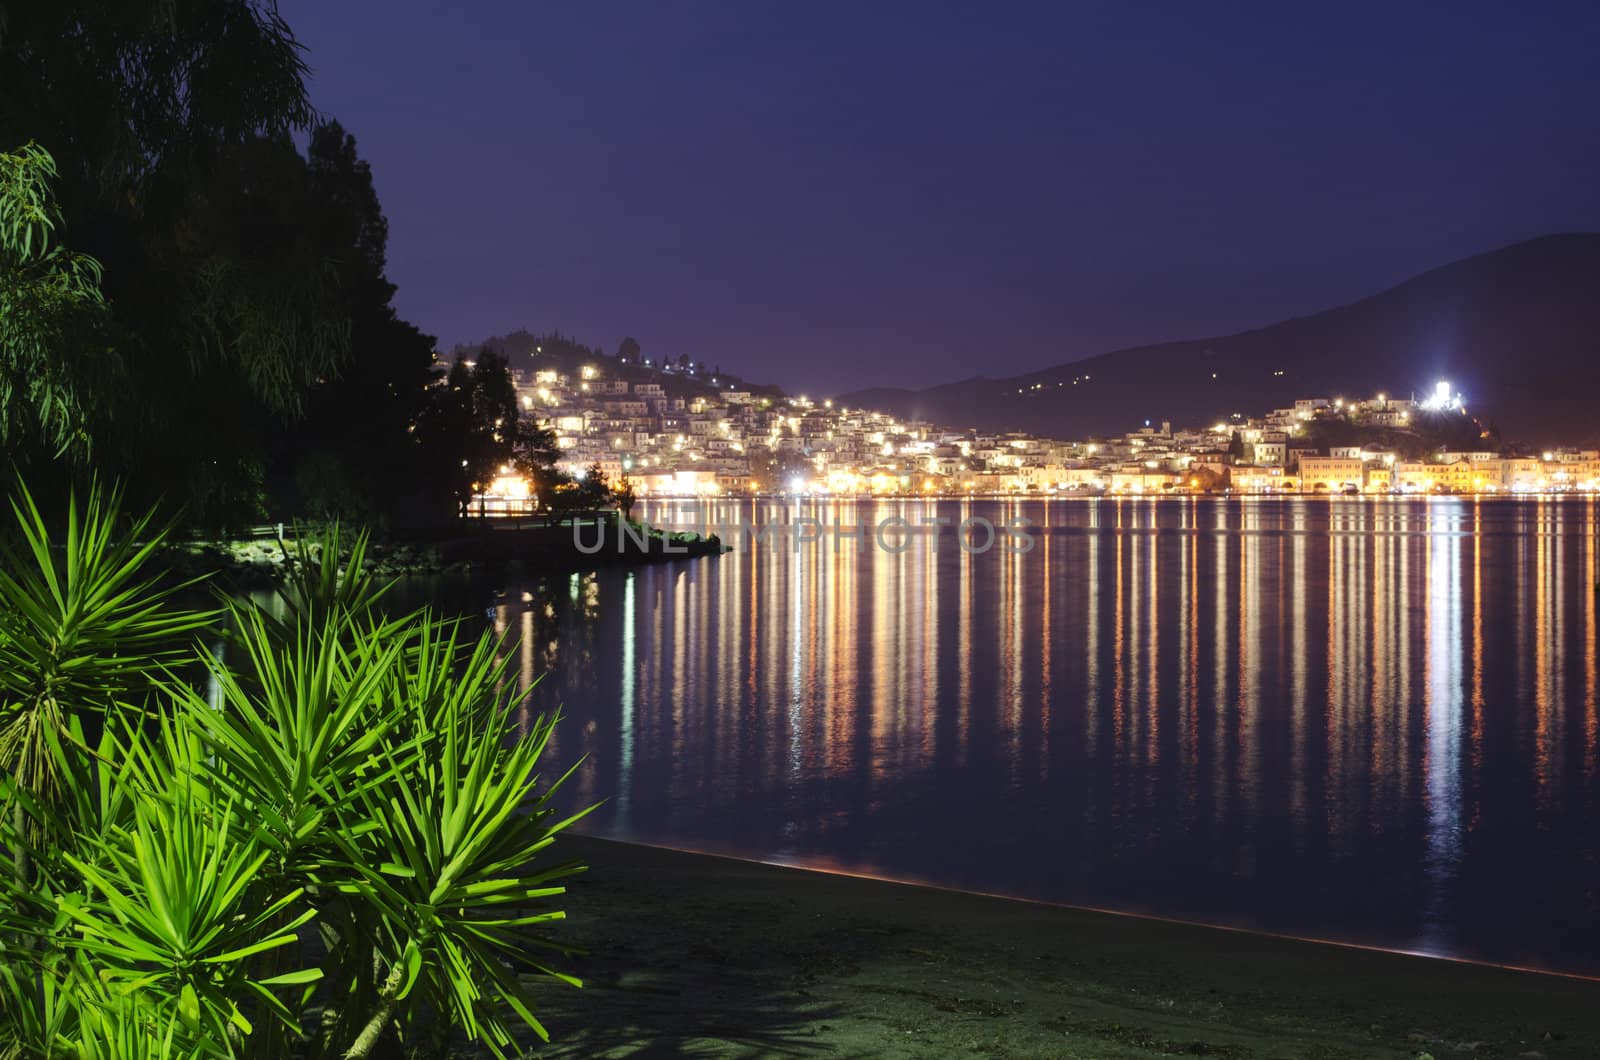 Nighttime shot of Poros in greece.